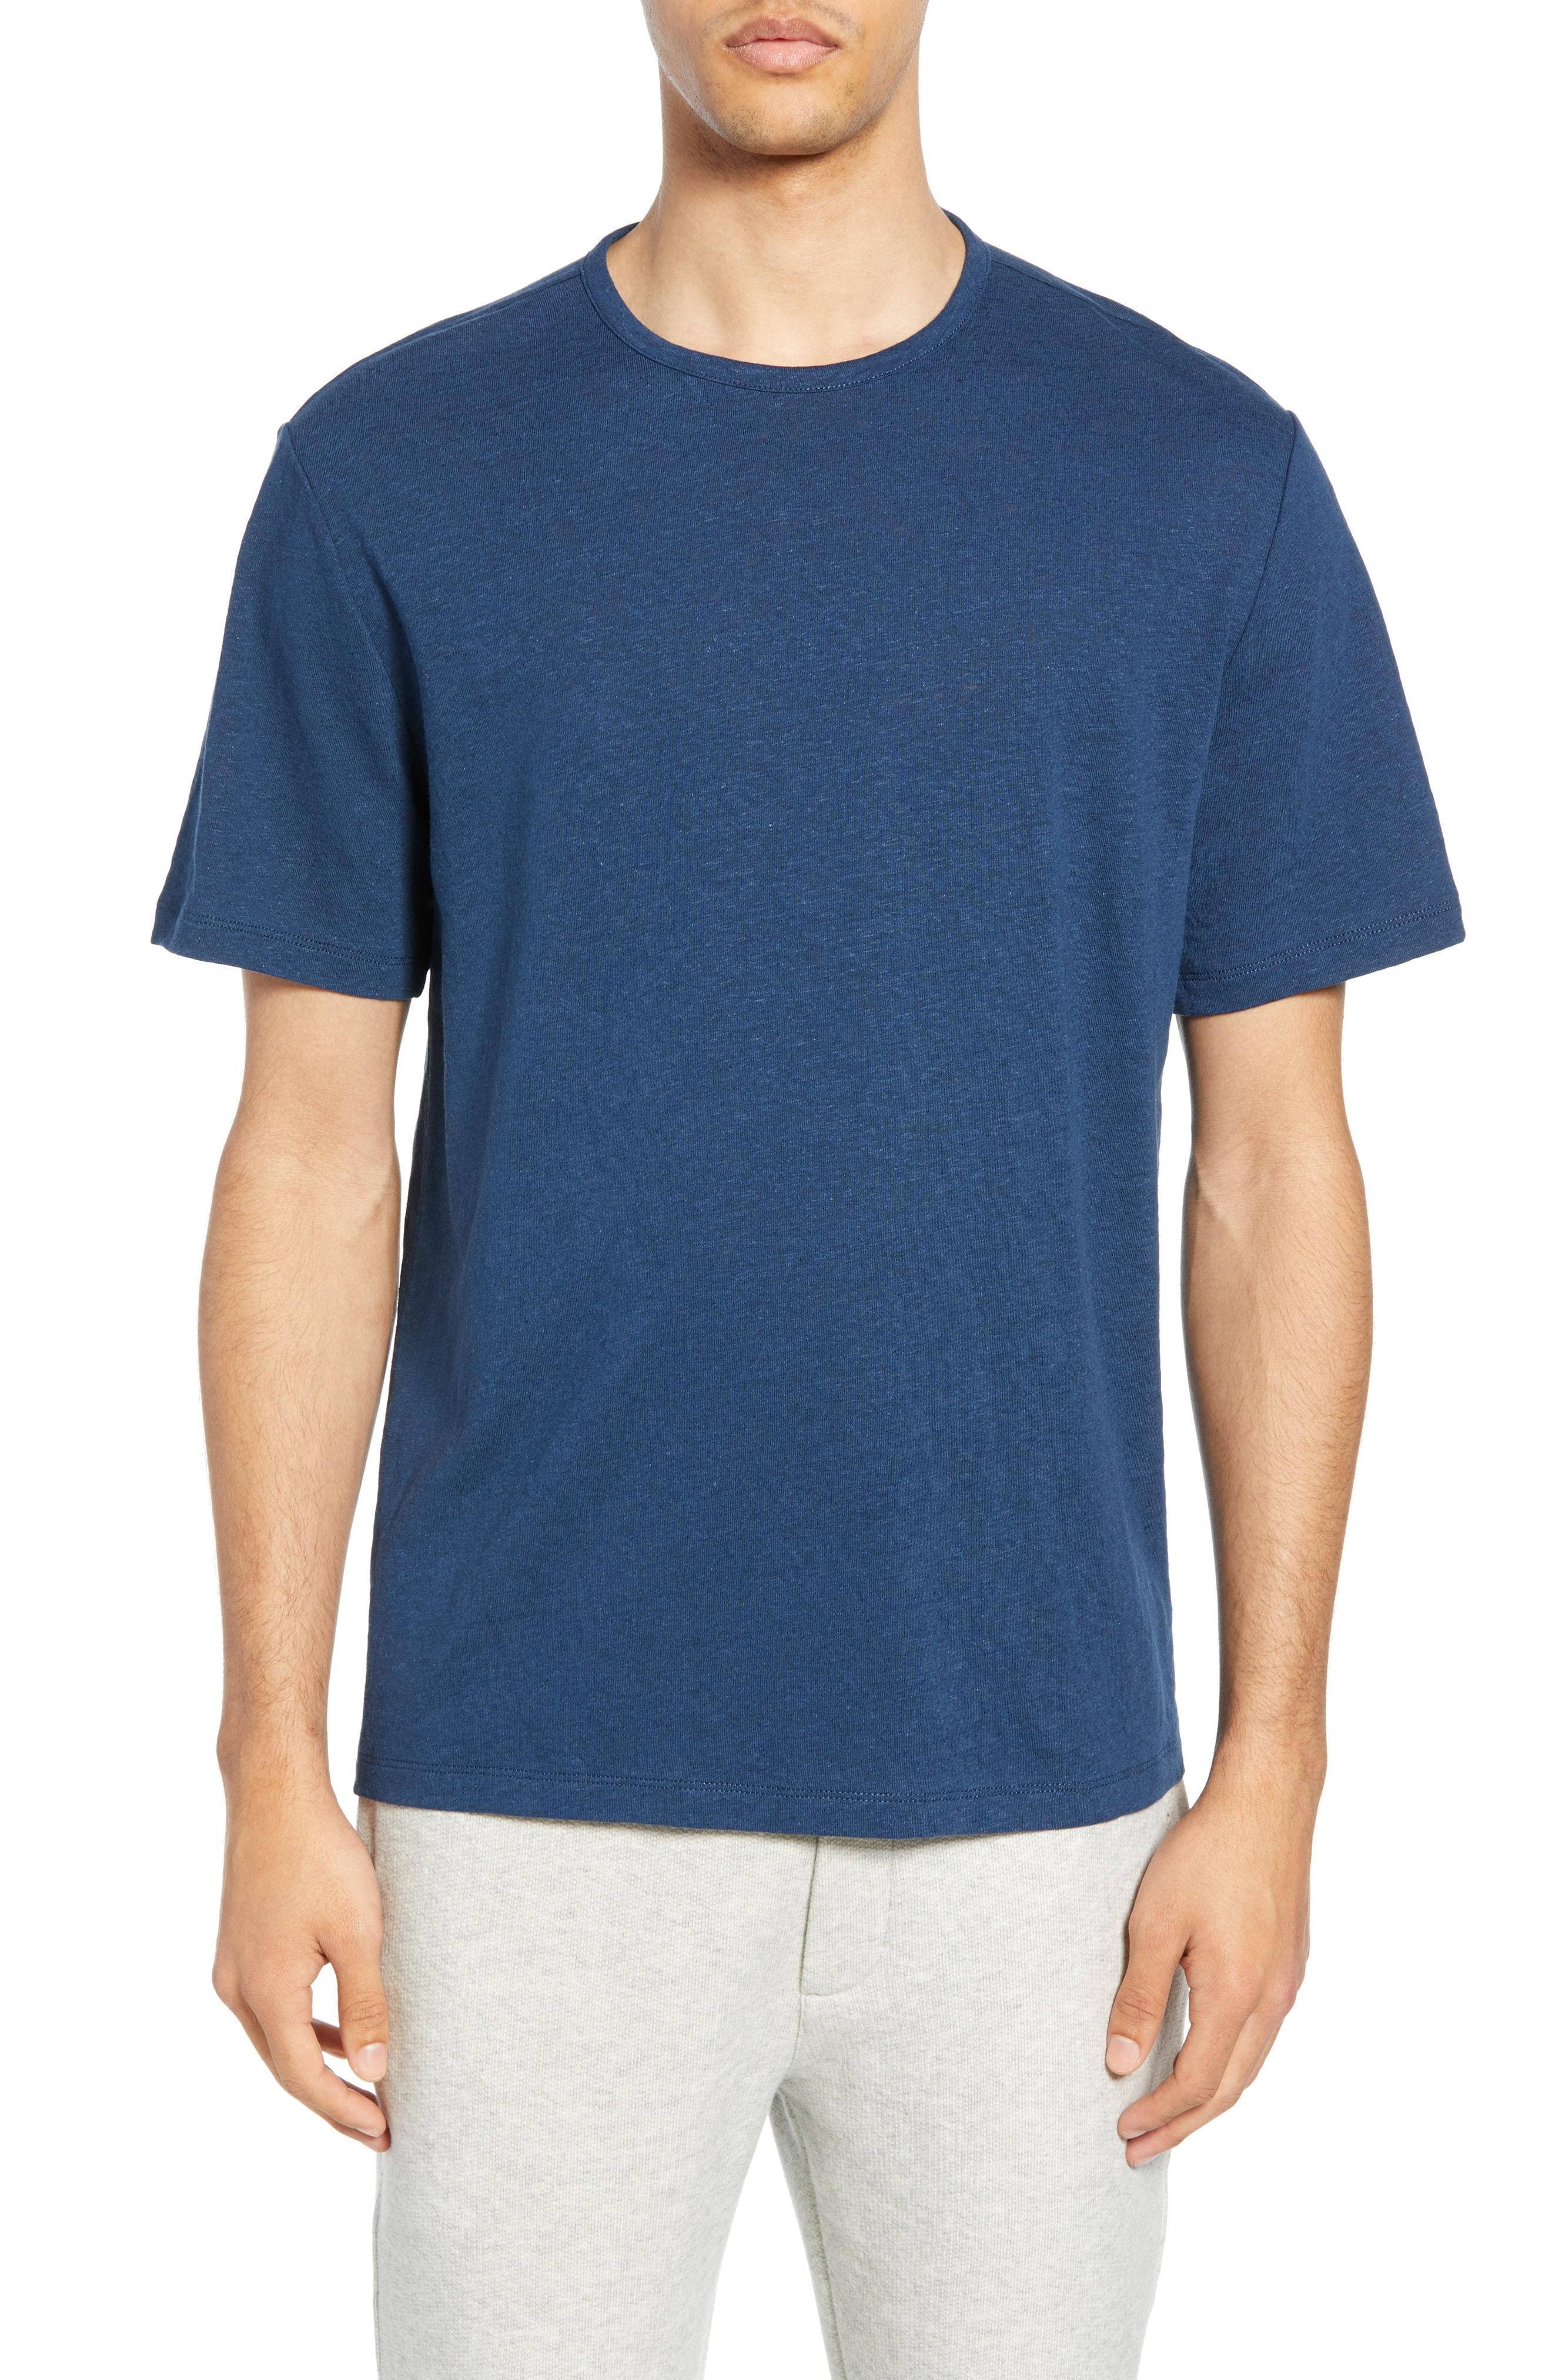 Lyst - Vince Regular Fit Linen & Cotton T-shirt in Blue for Men